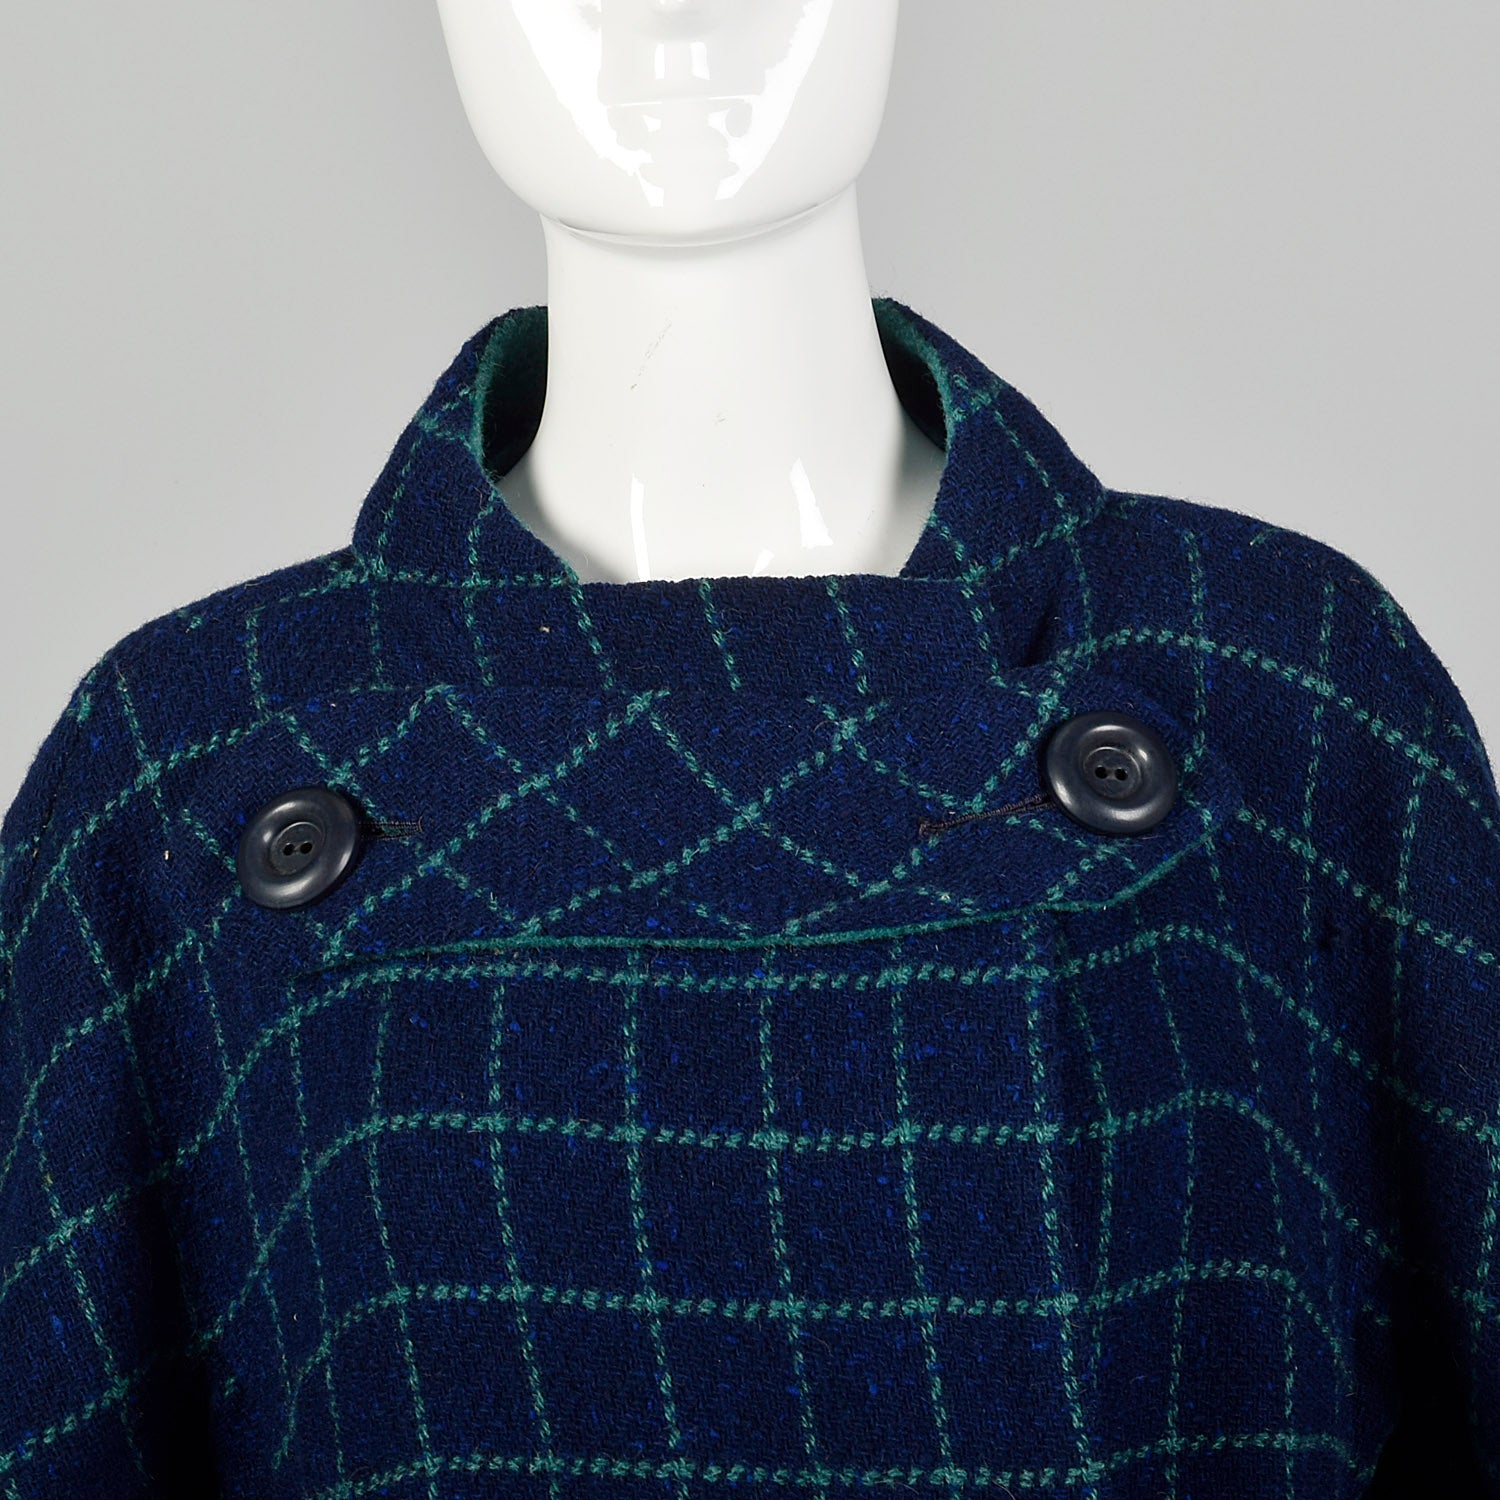 Medium Pauline Trigere 1960s Mod Blue Plaid Wool Blanket Coat